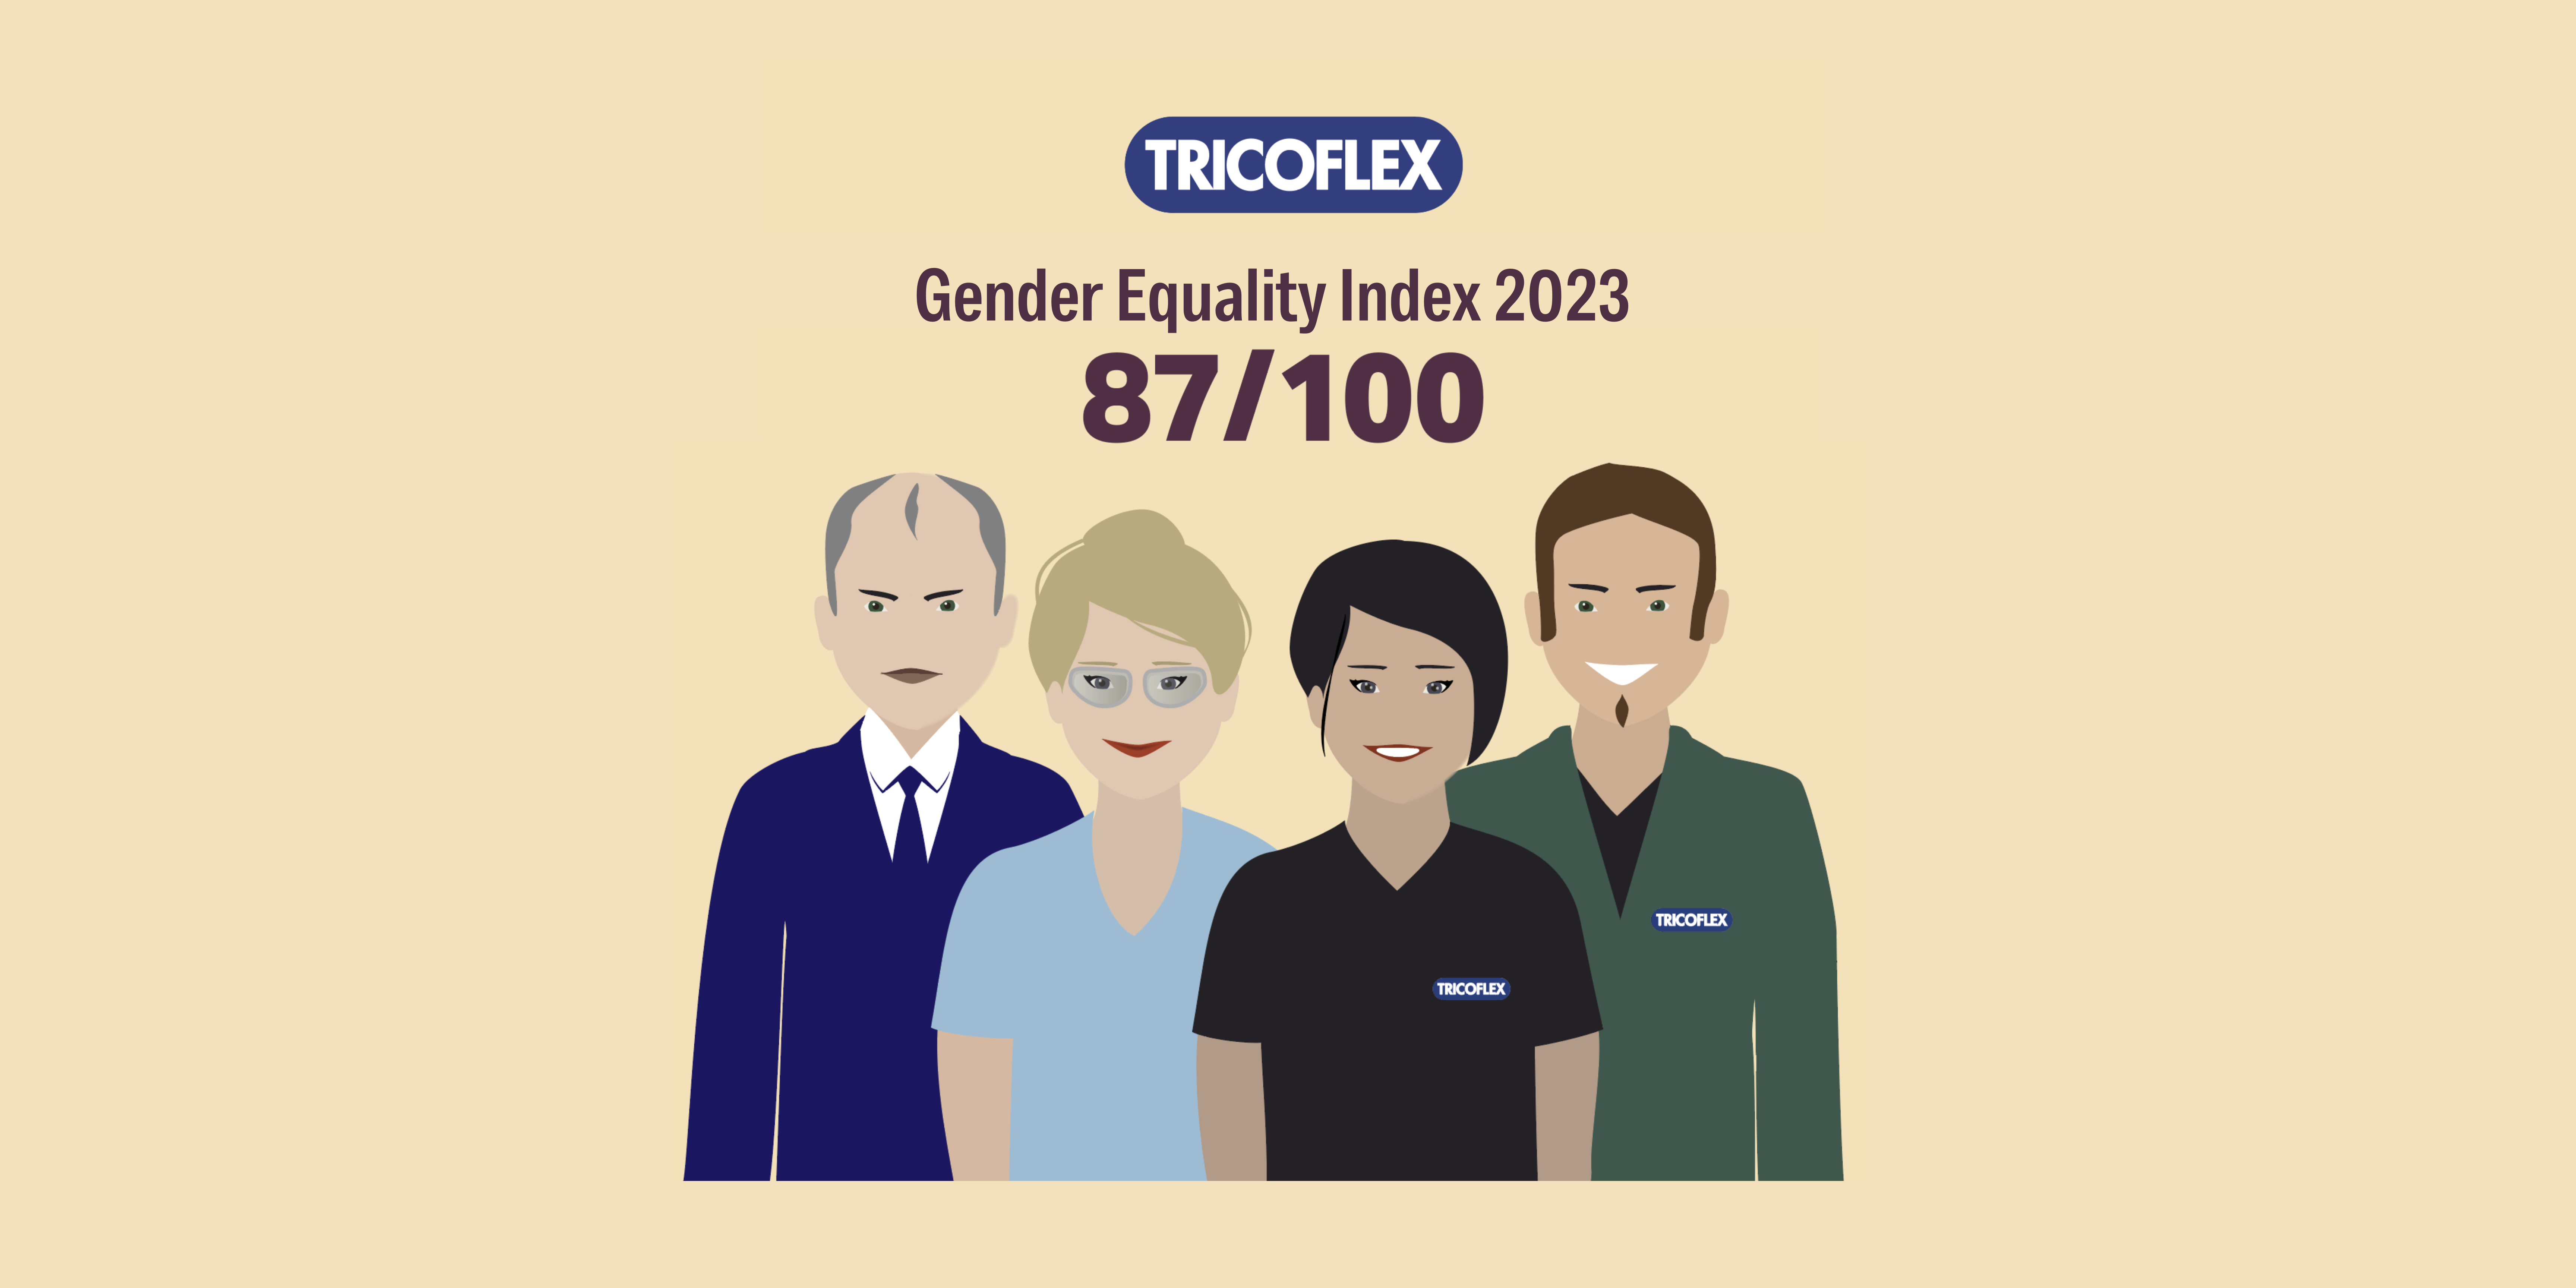 Gender equaty index for tricoflex - score